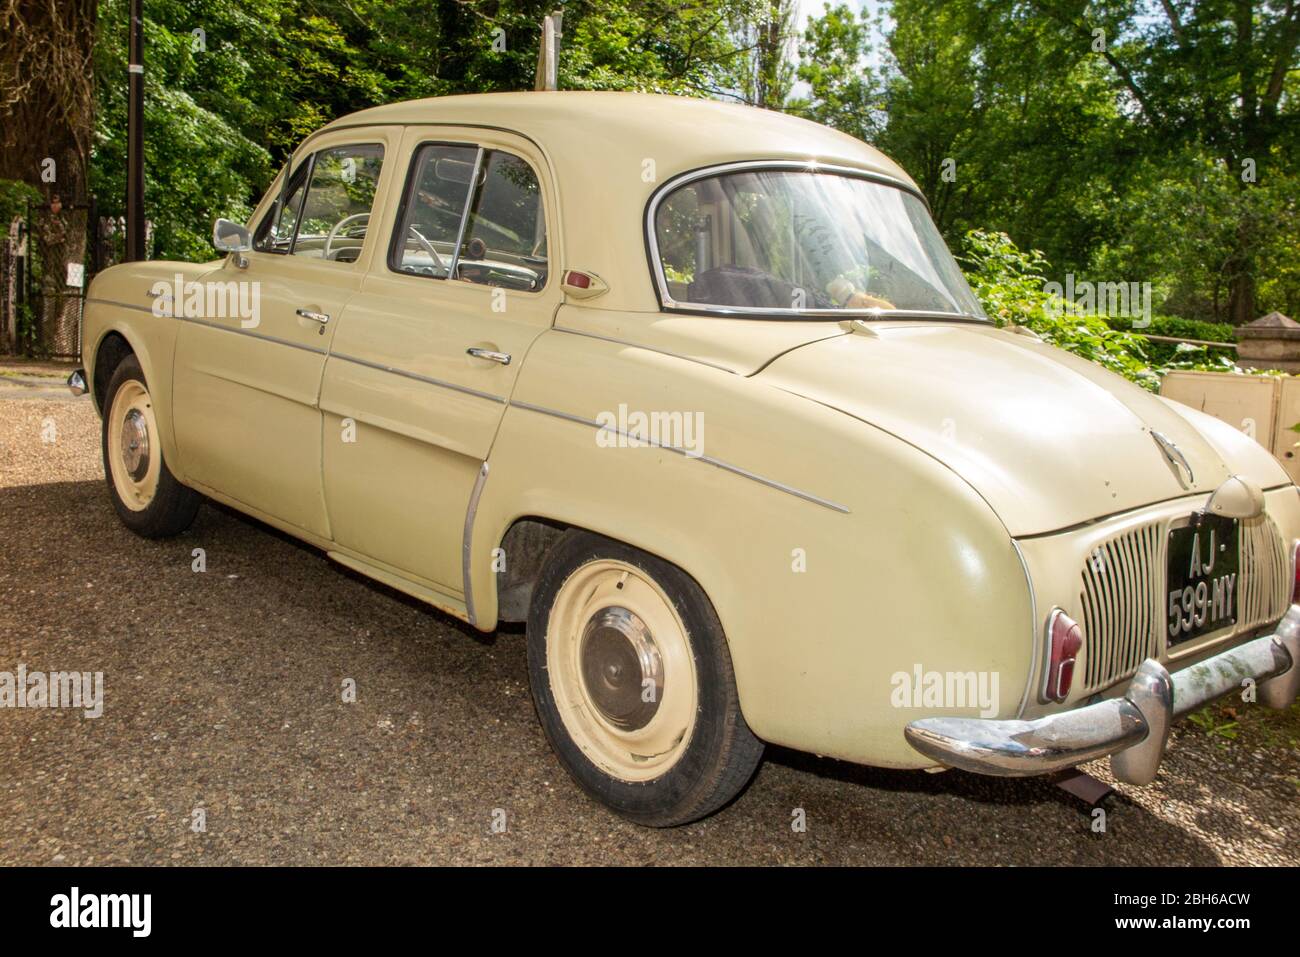 Bordeaux , Aquitaine / France - 04 16 2020 : Ondine Dauphine Renault vintage oldtimer car rear view Stock Photo